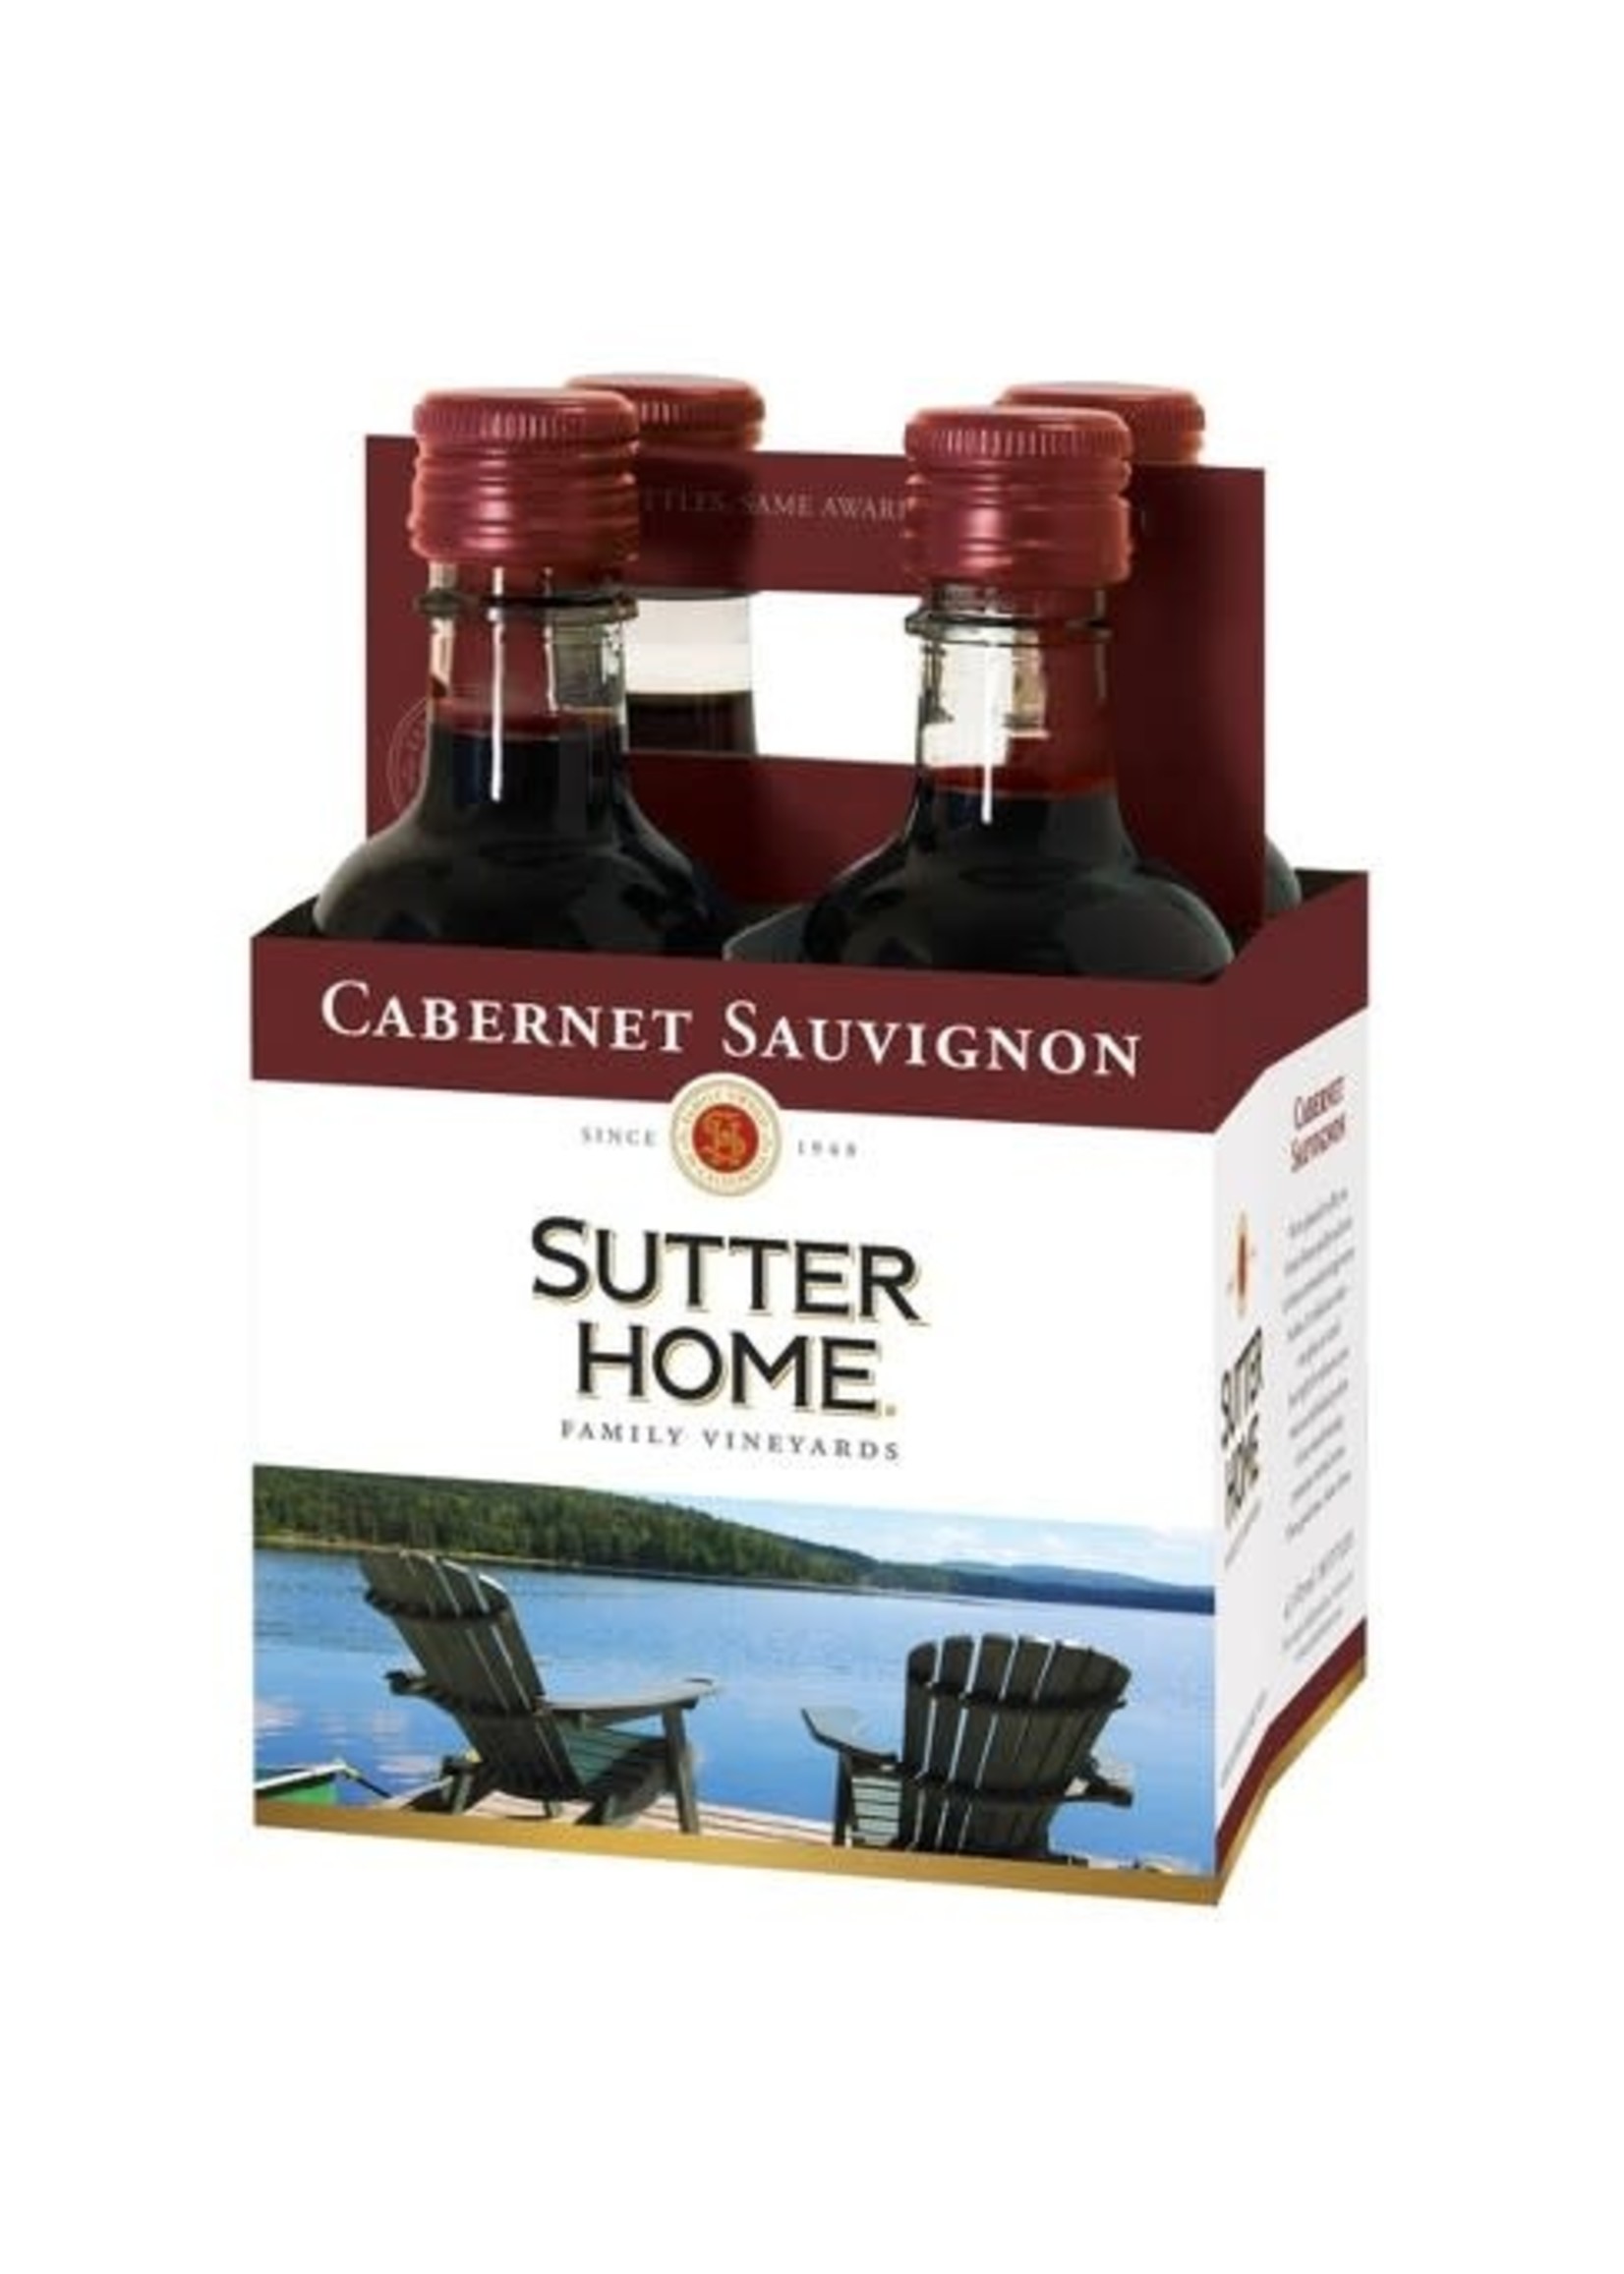 Sutter Home Cabernet Sauvignon Pet 4pk 187ml Bottles